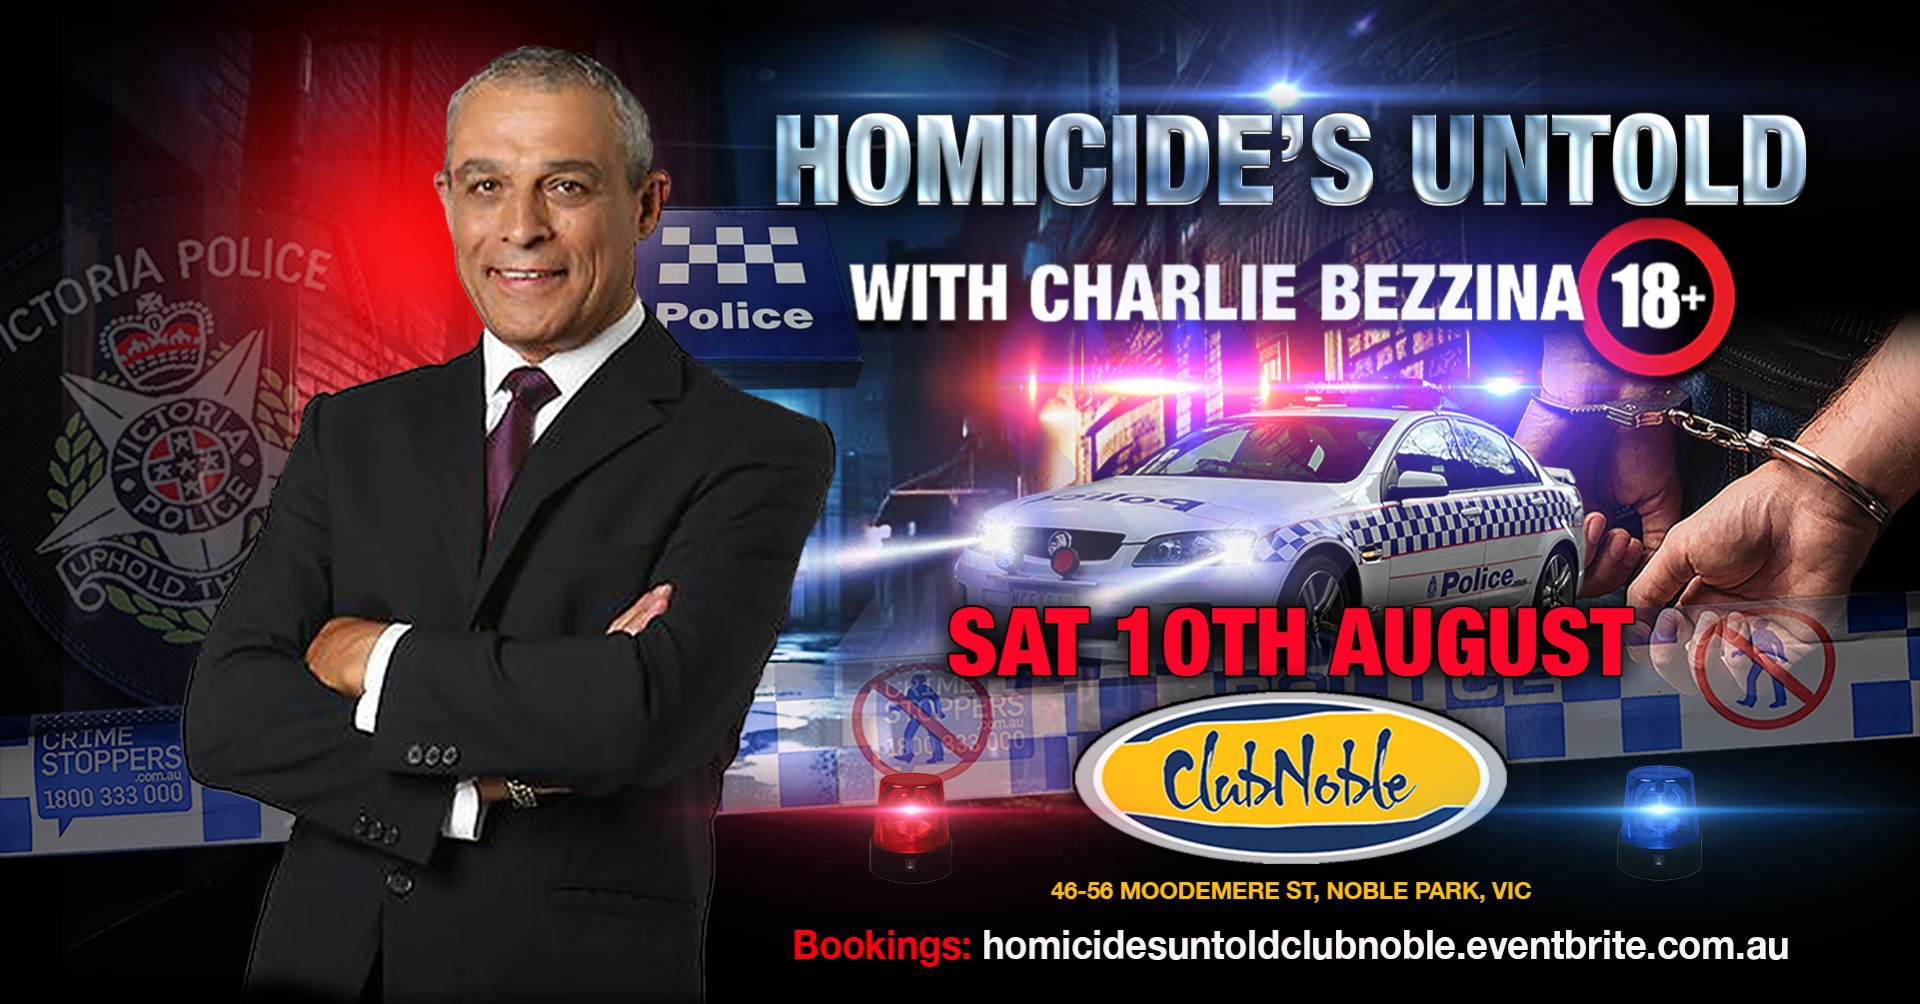 Homicide’s Untold with Charlie Bezzina